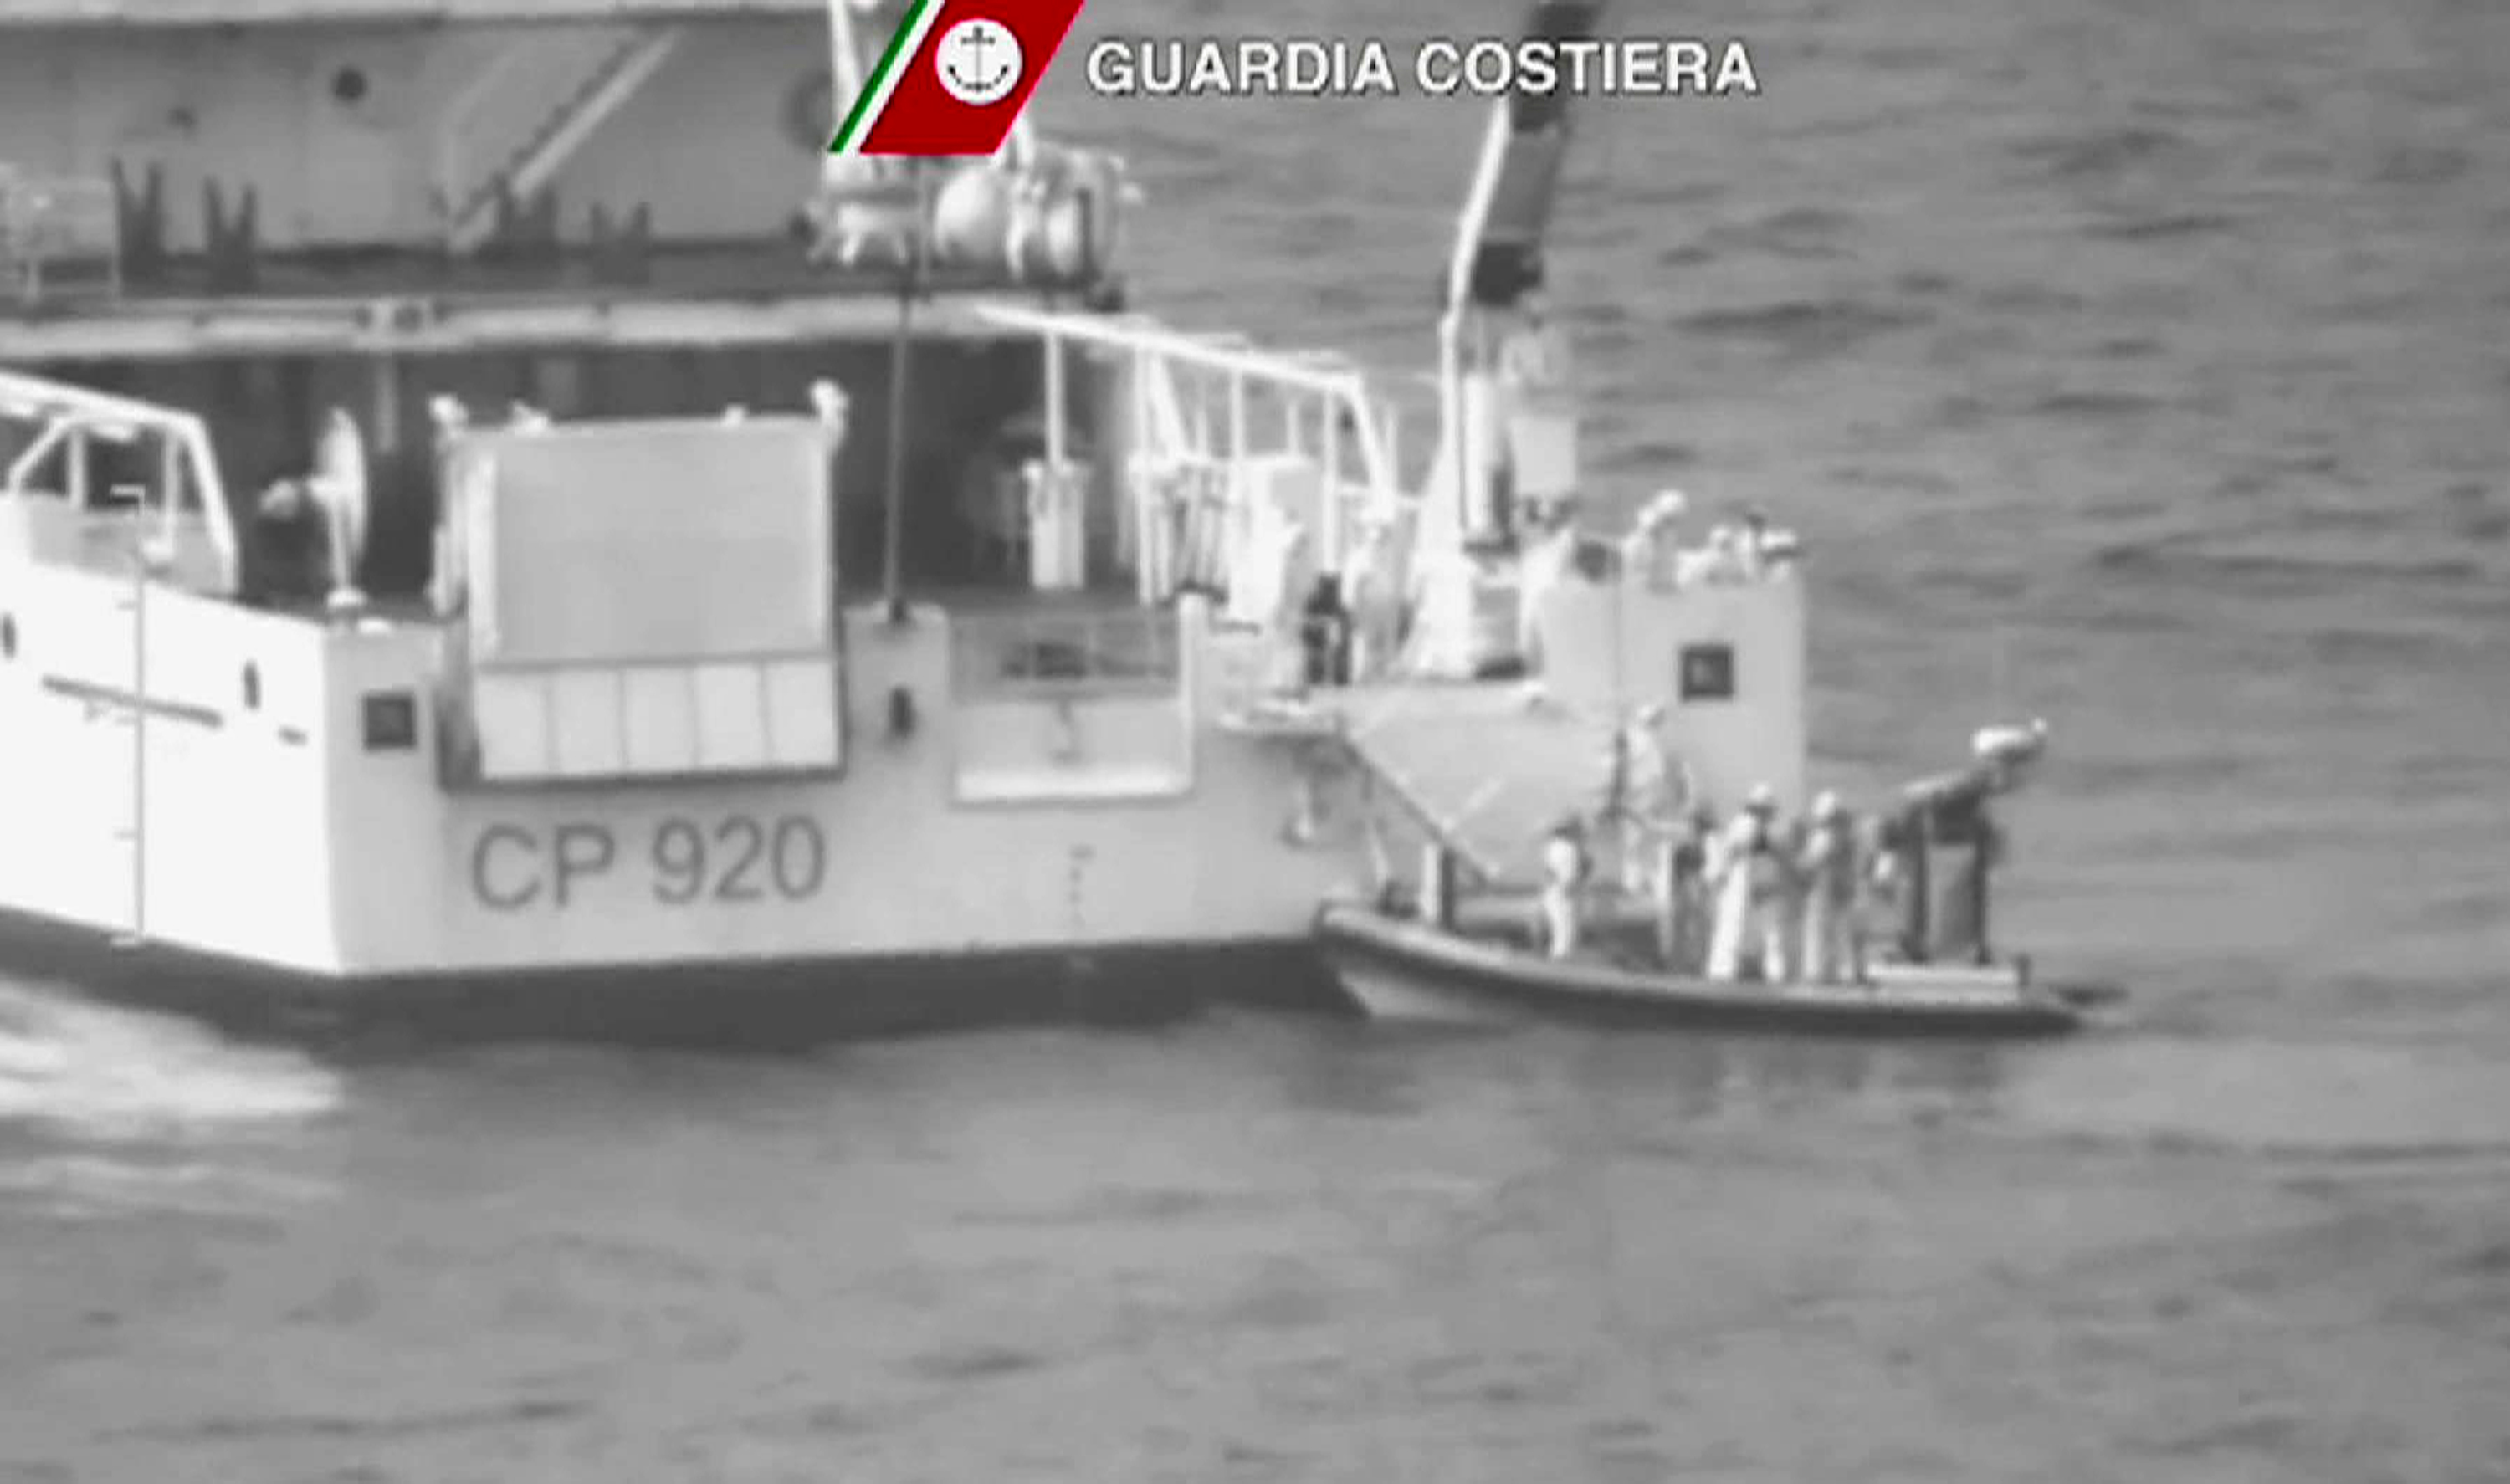 Hundreds feared dead as boat capsizes in Mediterranean - NZ Herald